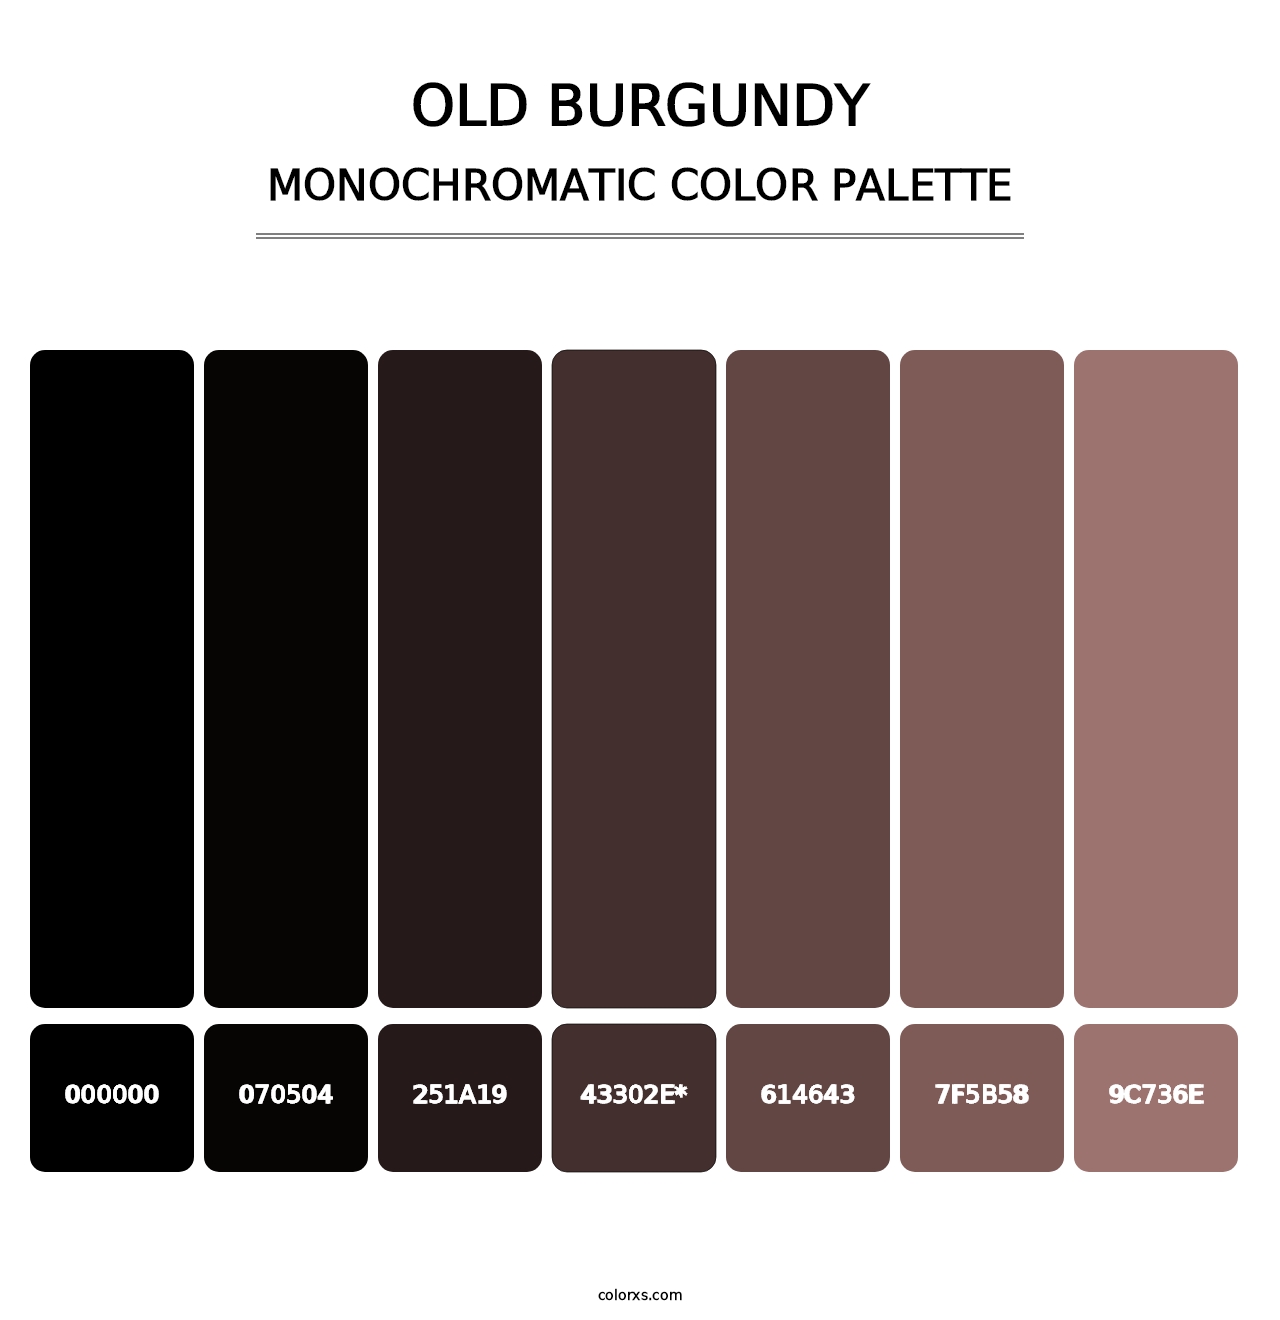 Old Burgundy - Monochromatic Color Palette